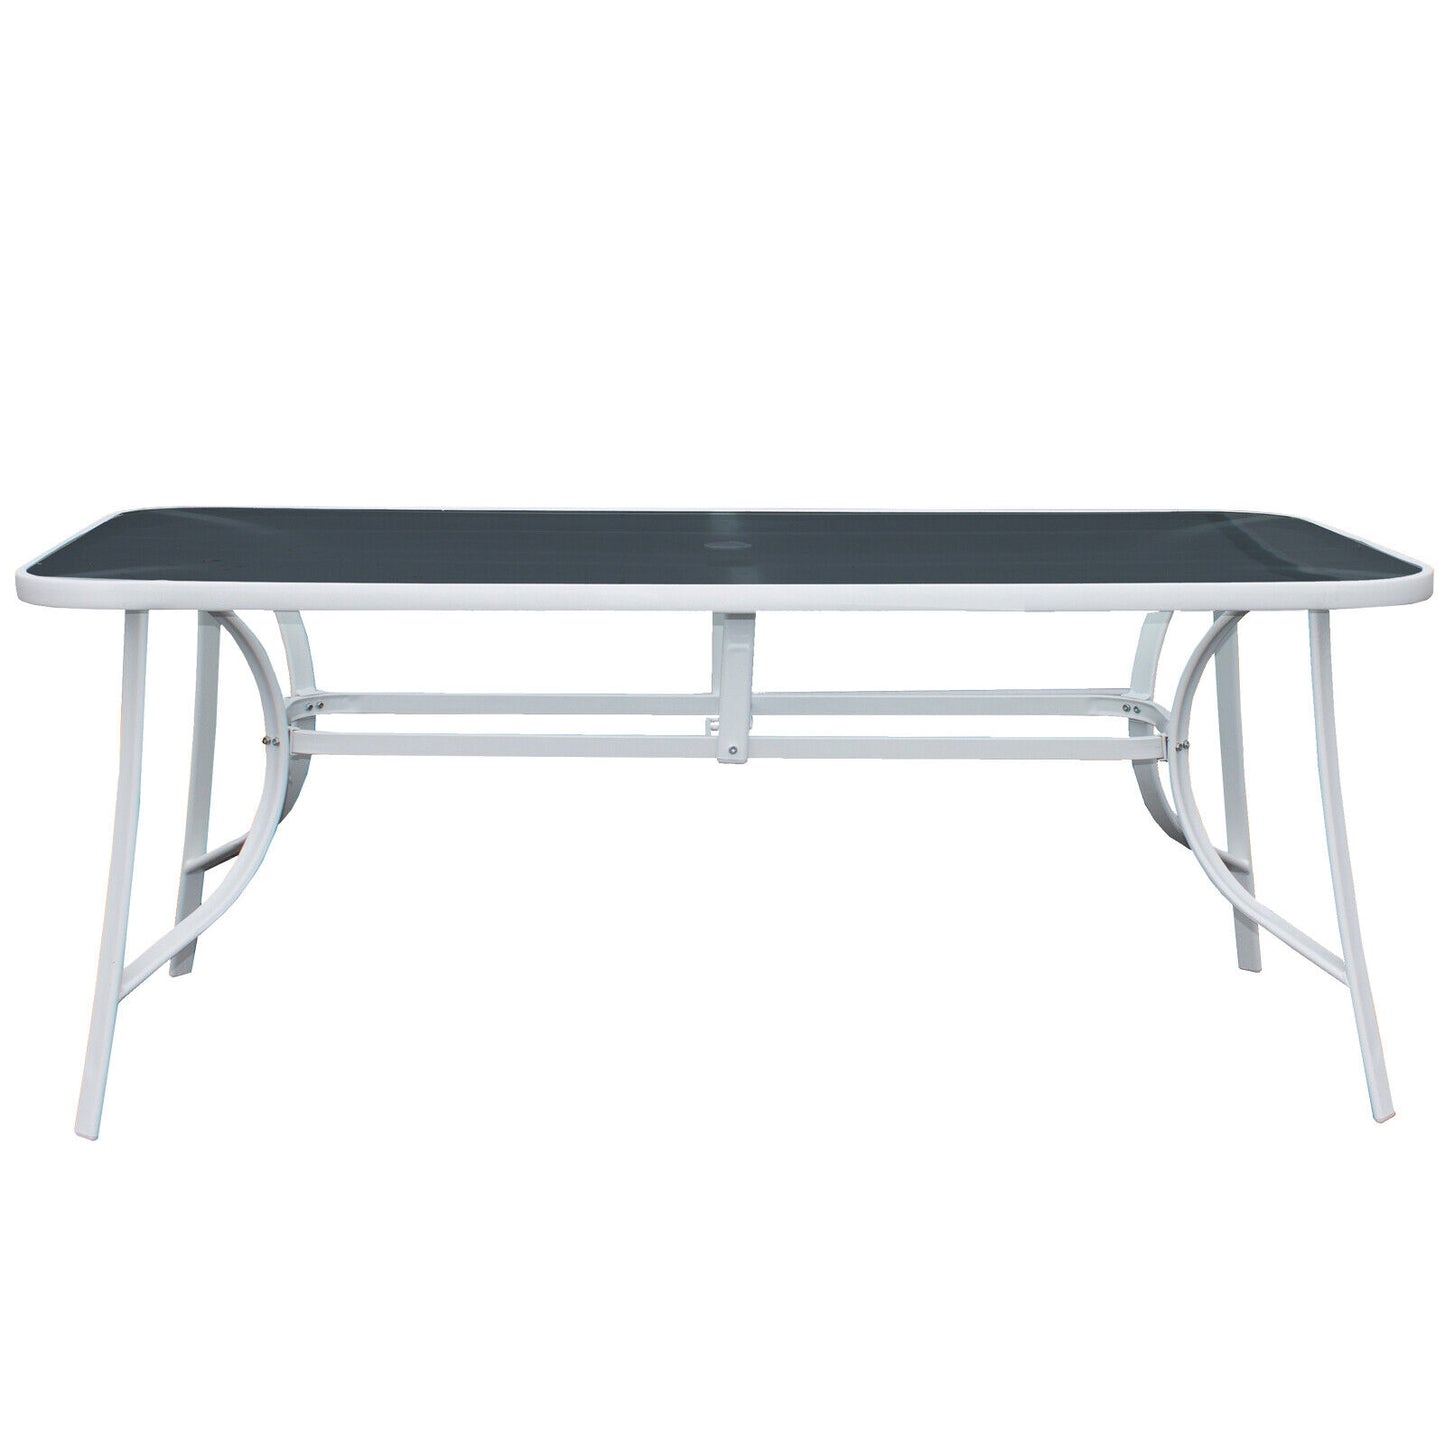 Copy of 9PC Rectangular White Frame Black Glass Table, Cream Chair & Parasol Furniture Set